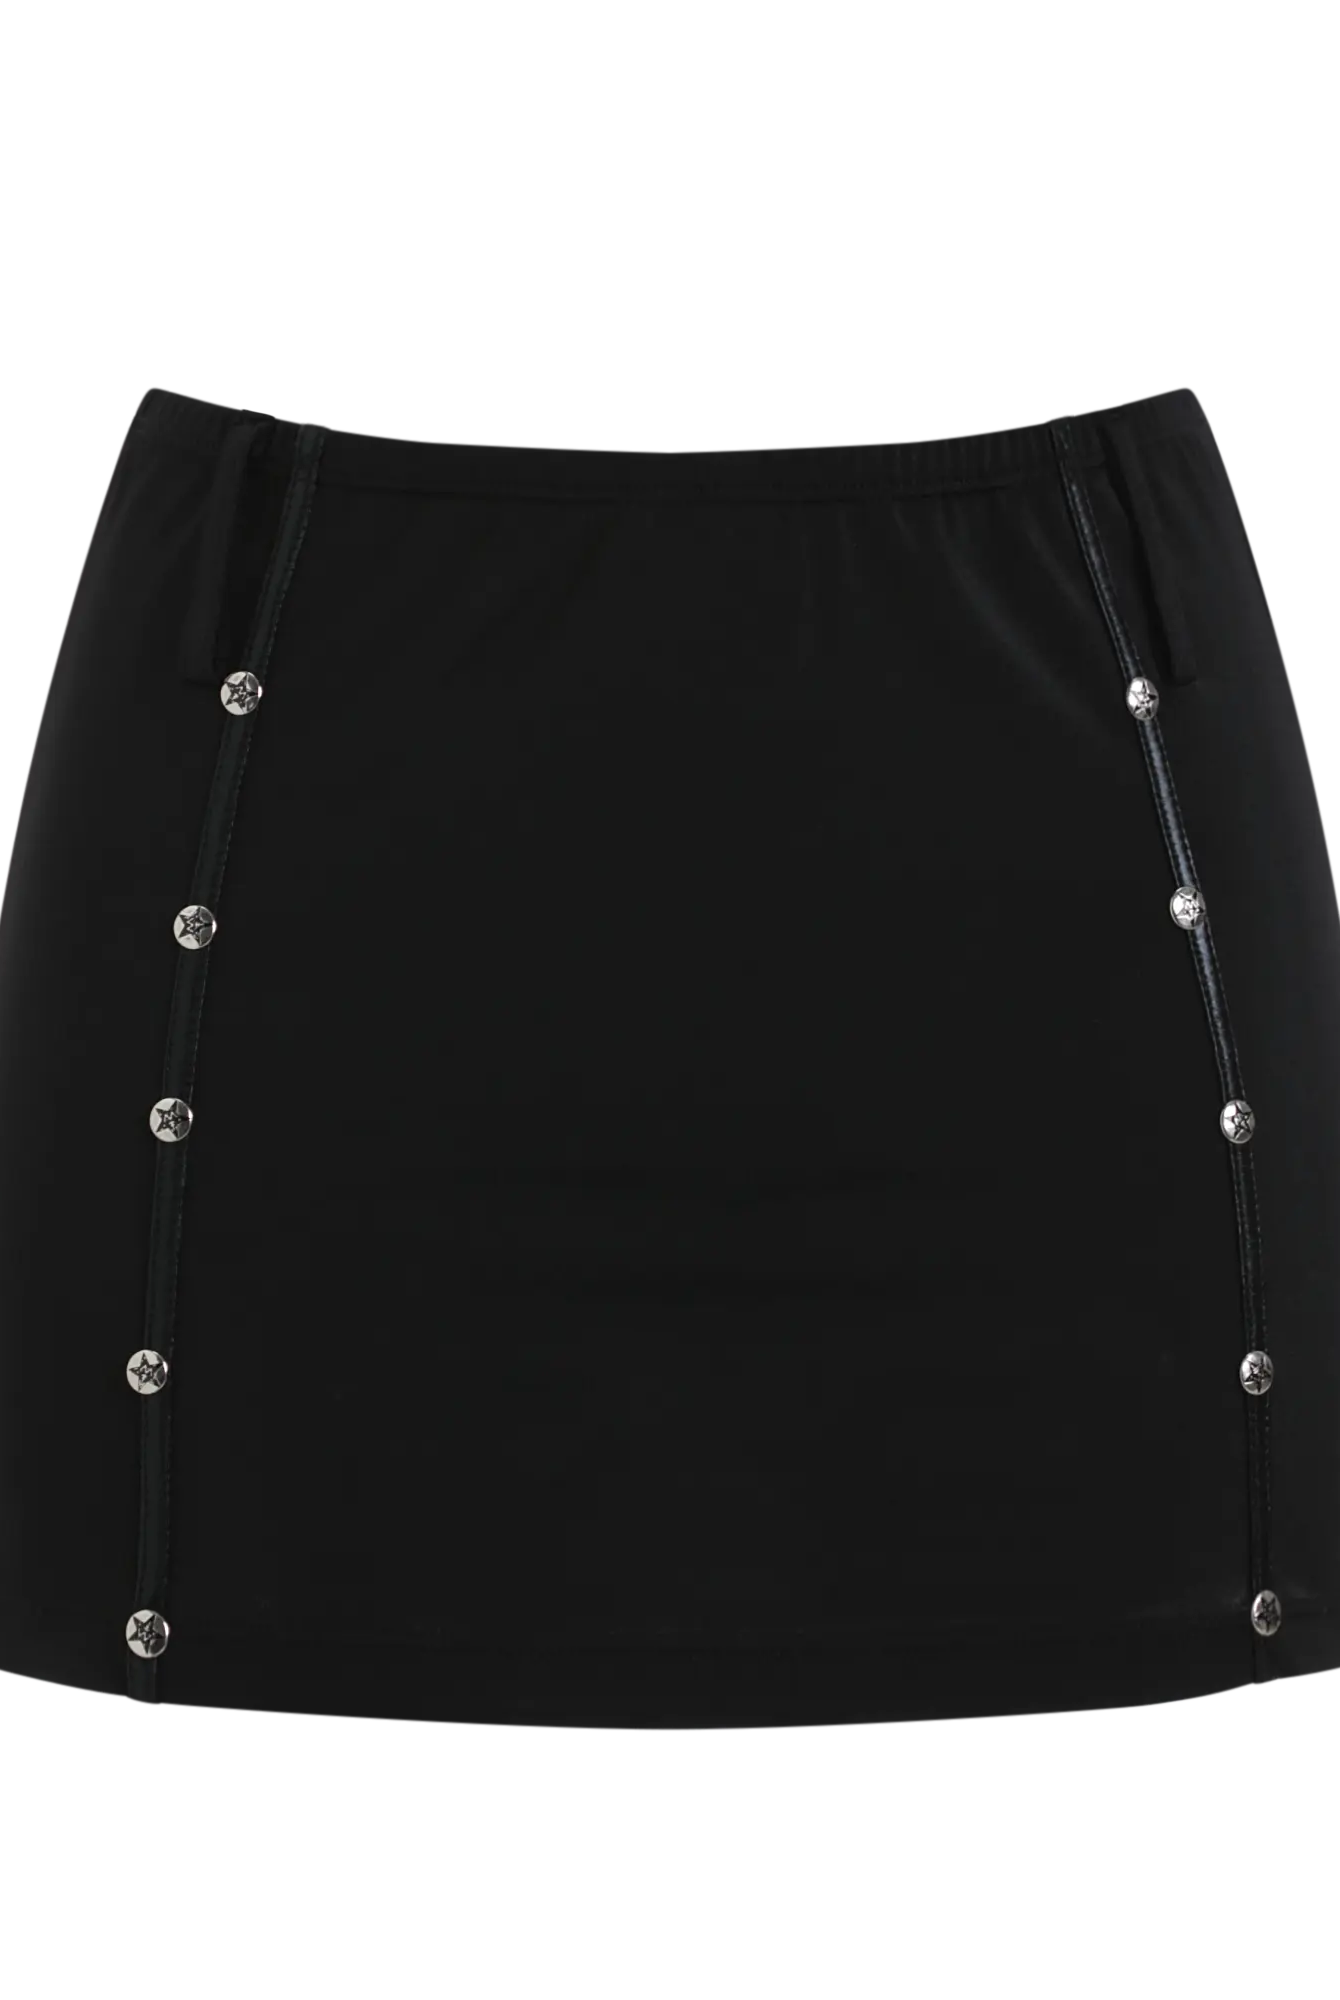 Seductive Deep V Bodycon Mini Skirt Police Uniform Lingerie Set Peach Passion